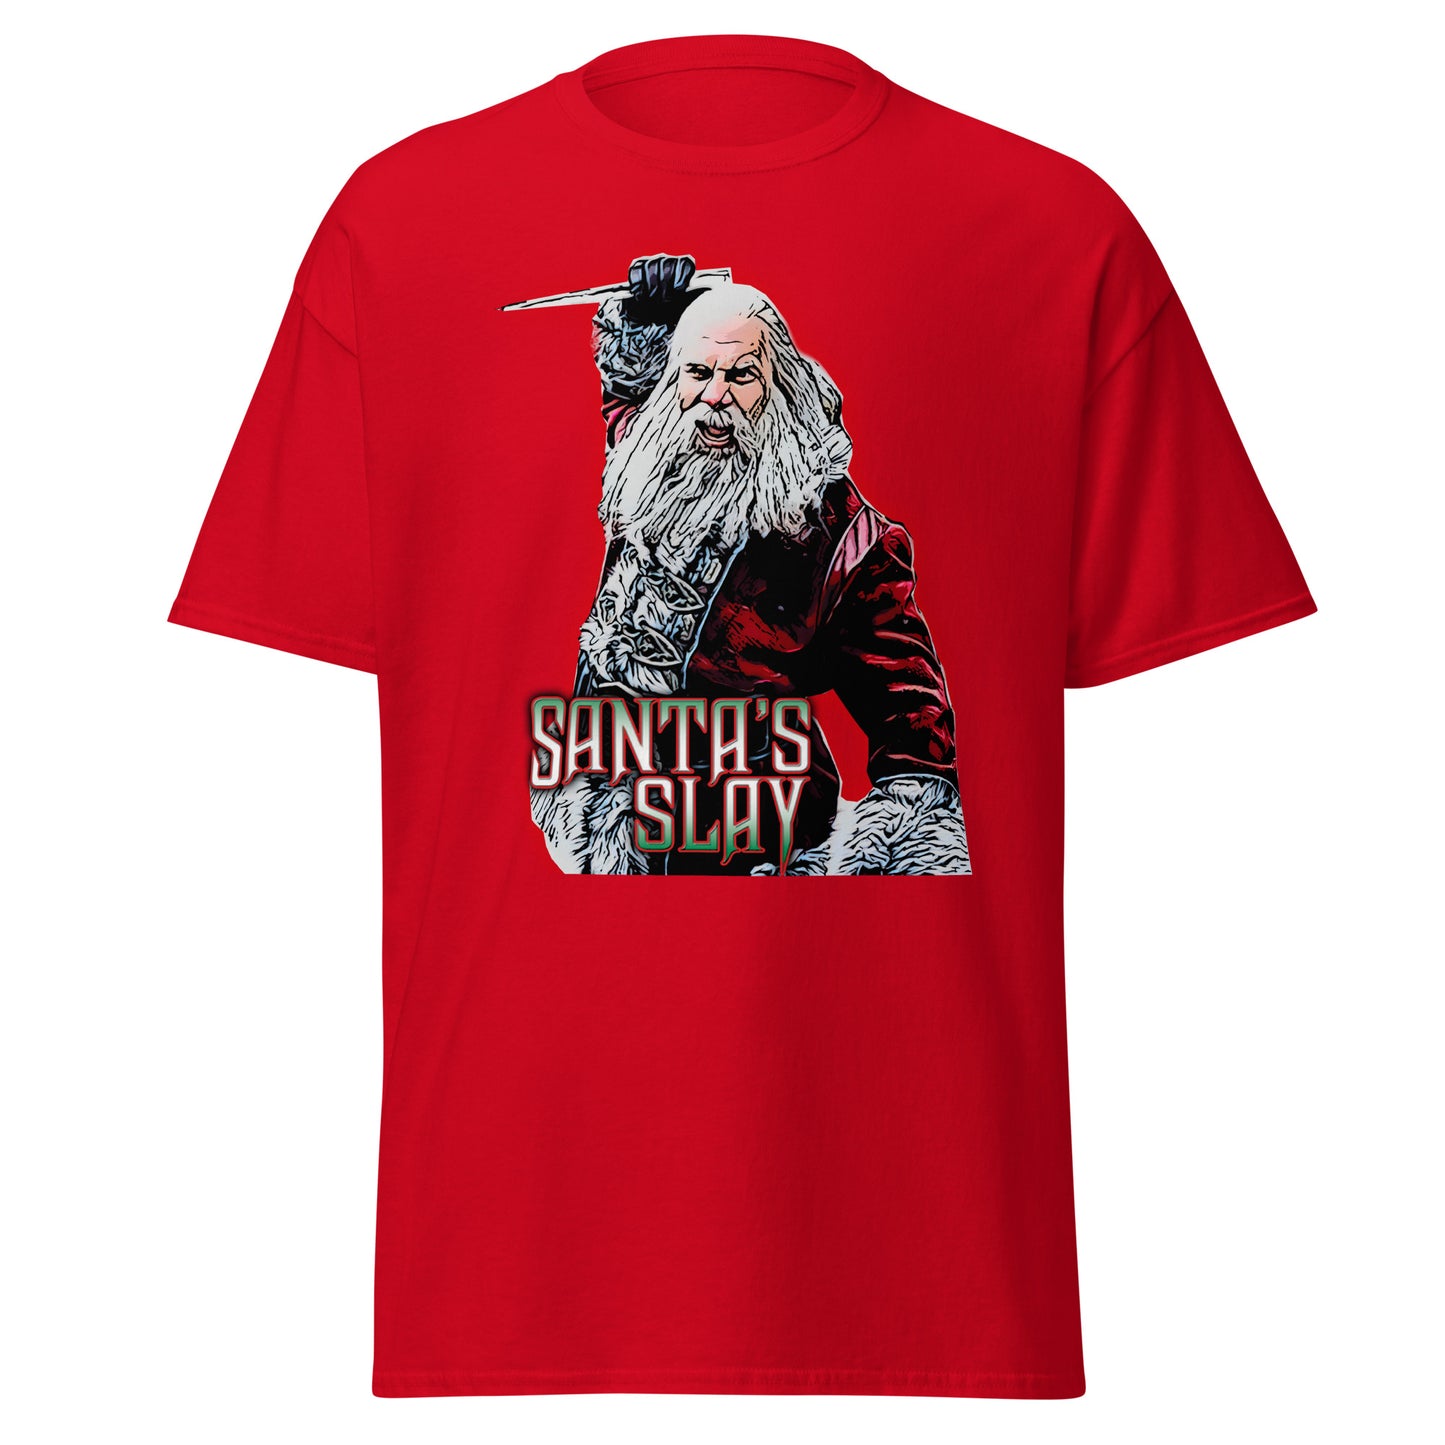 Santa's Slay T-Shirt - A Twisted Holiday Surprise